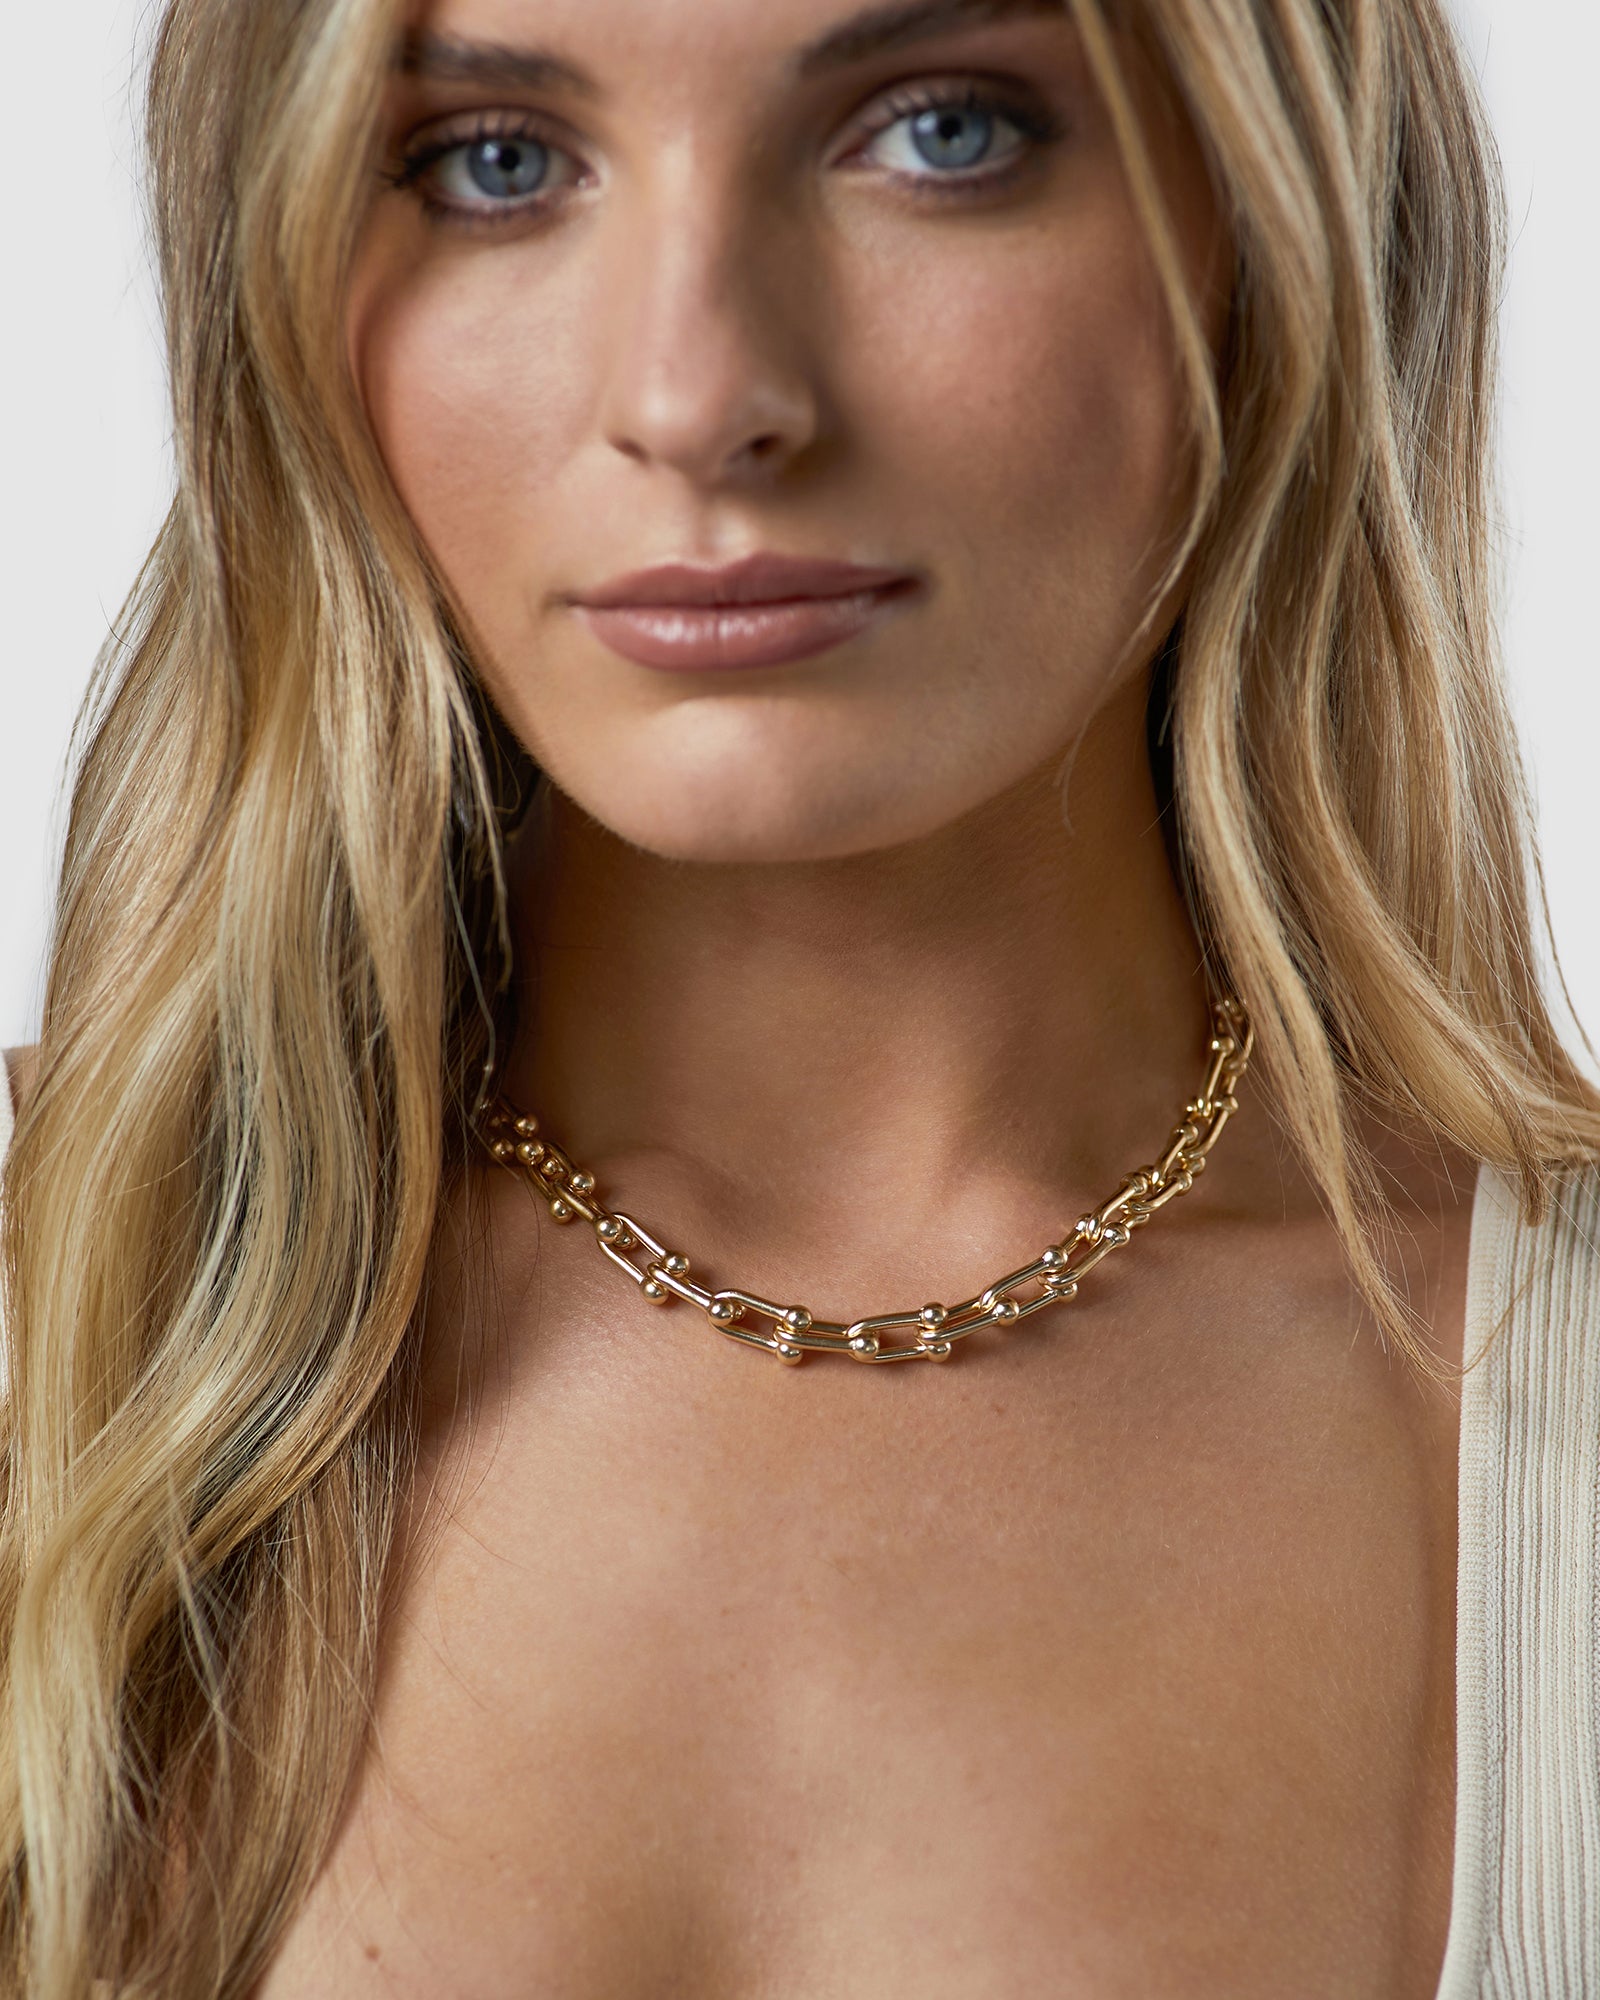 Kitte Bond Necklace Gold Worn By Model